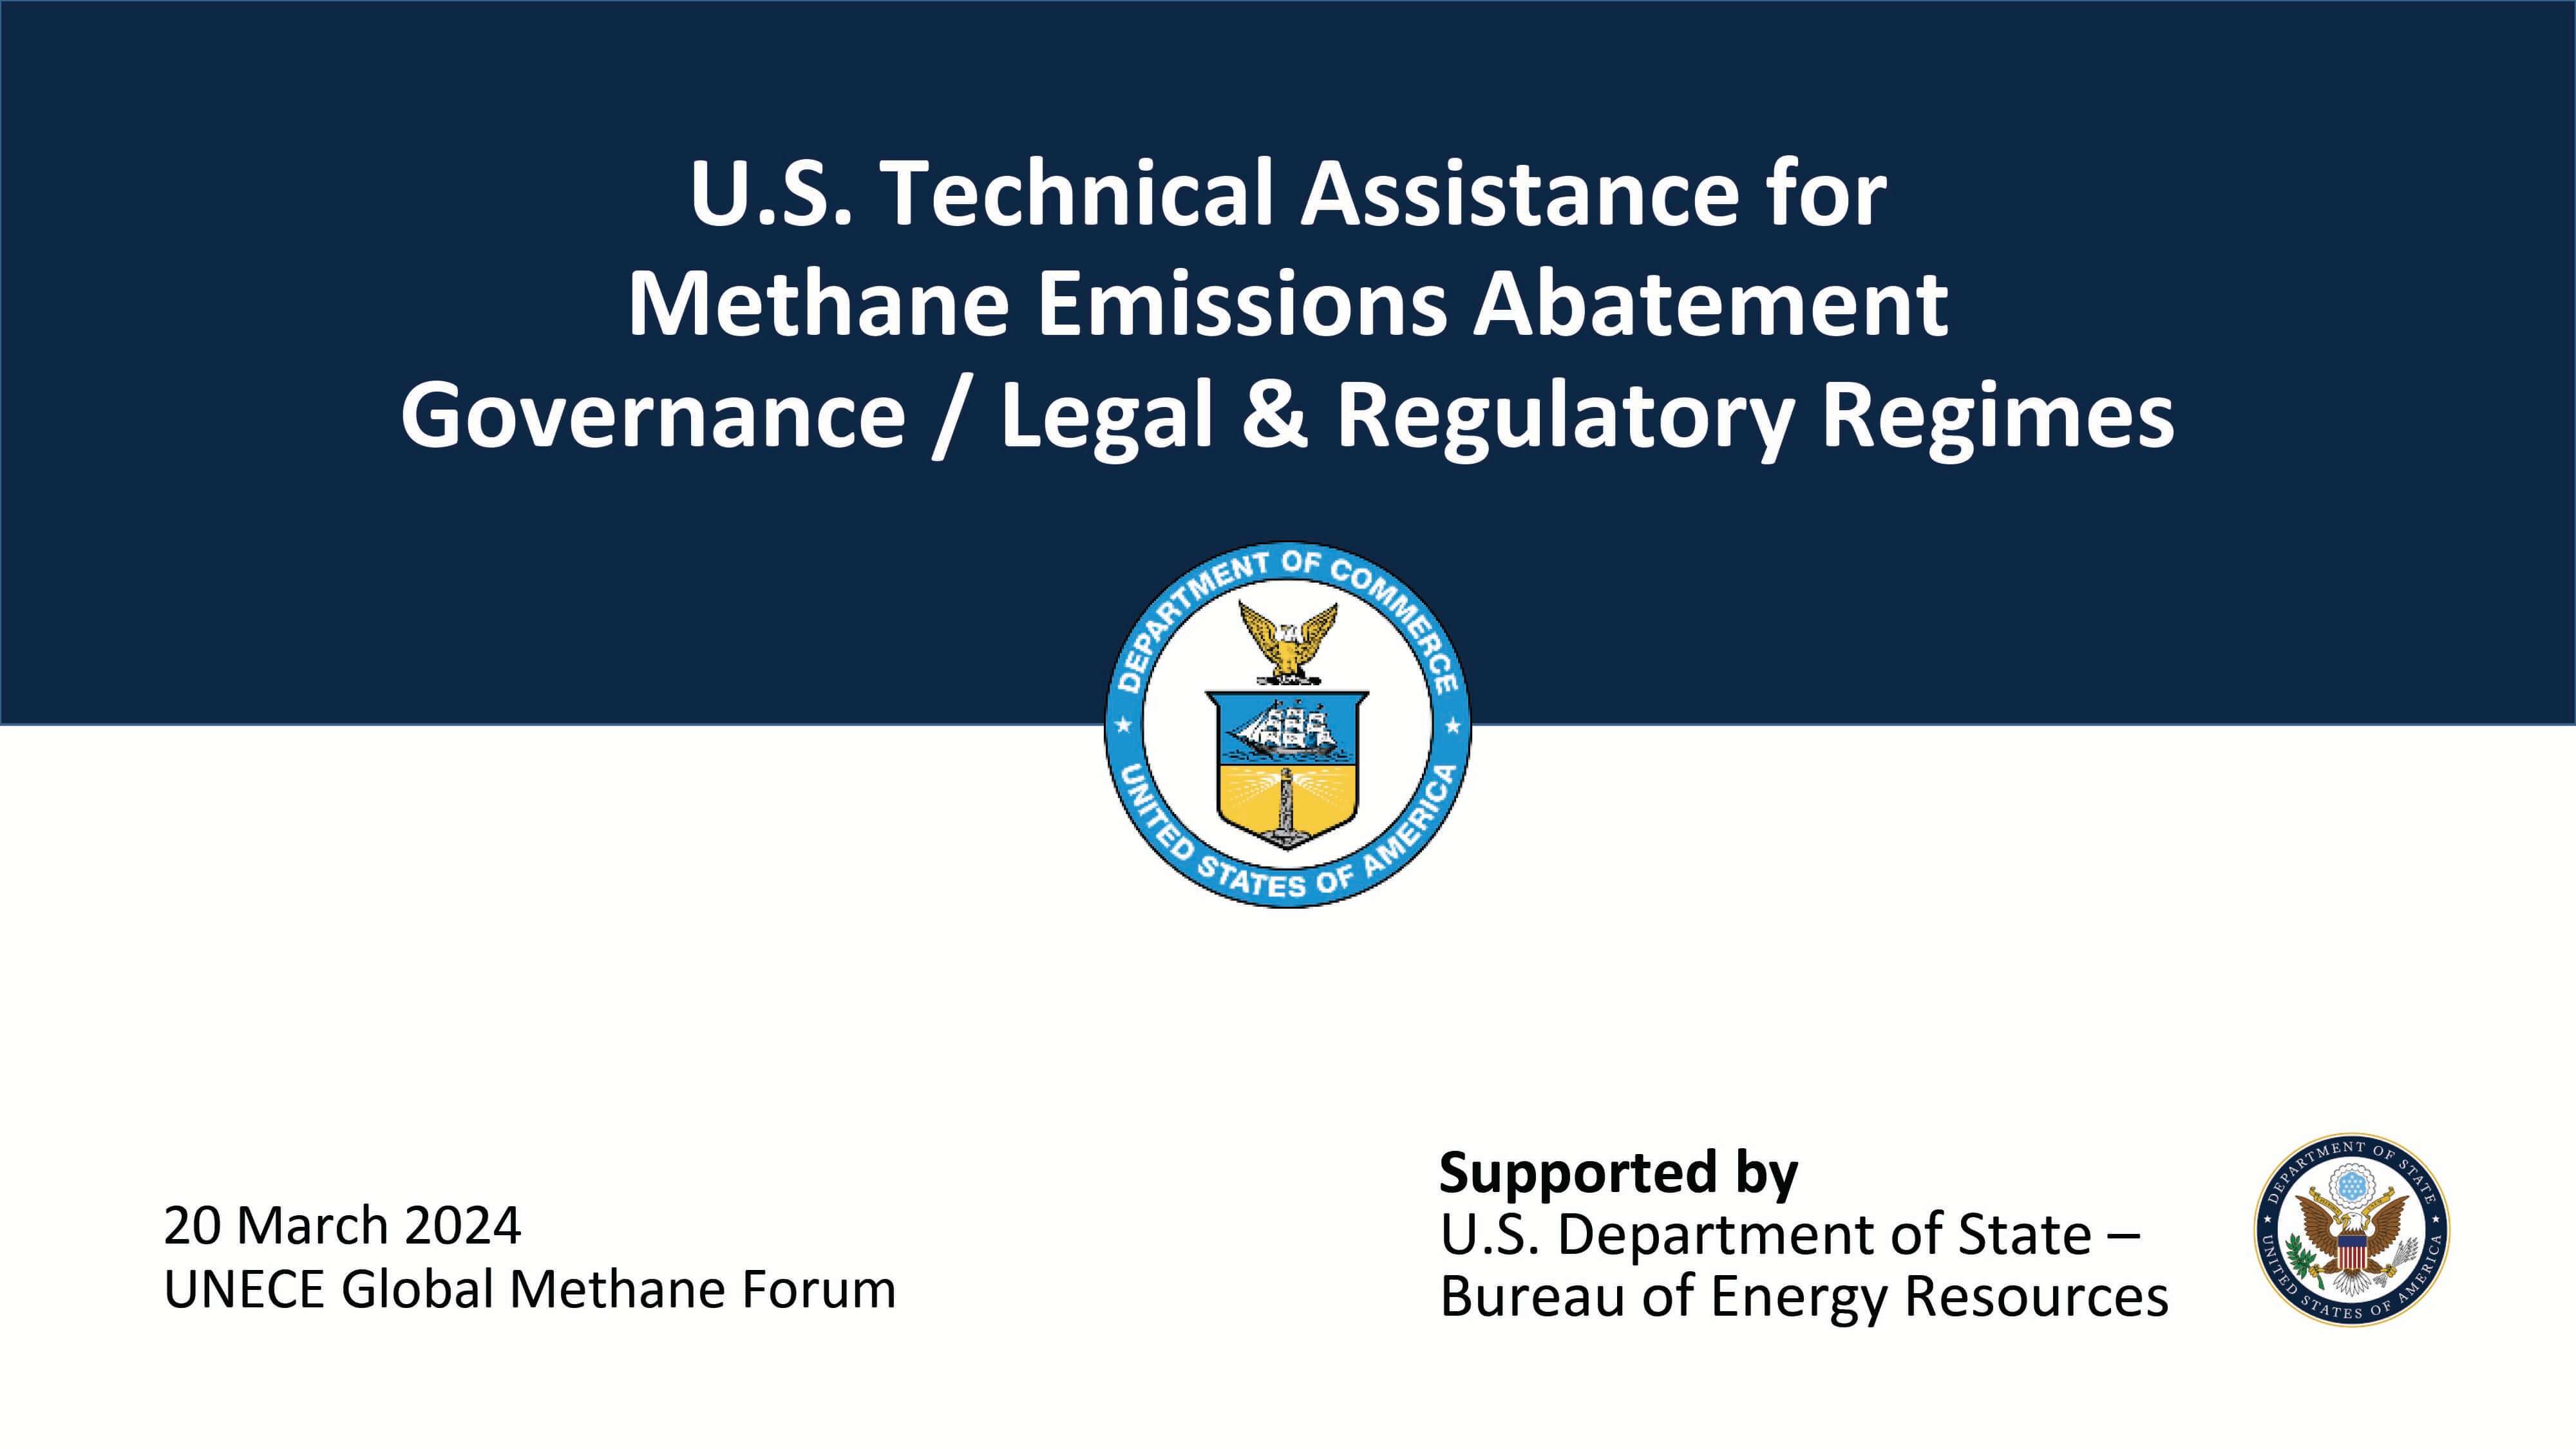 U.S. Technical Assistance for Methane Emissions Abatement Governance/Legal & Regulatory Regimes